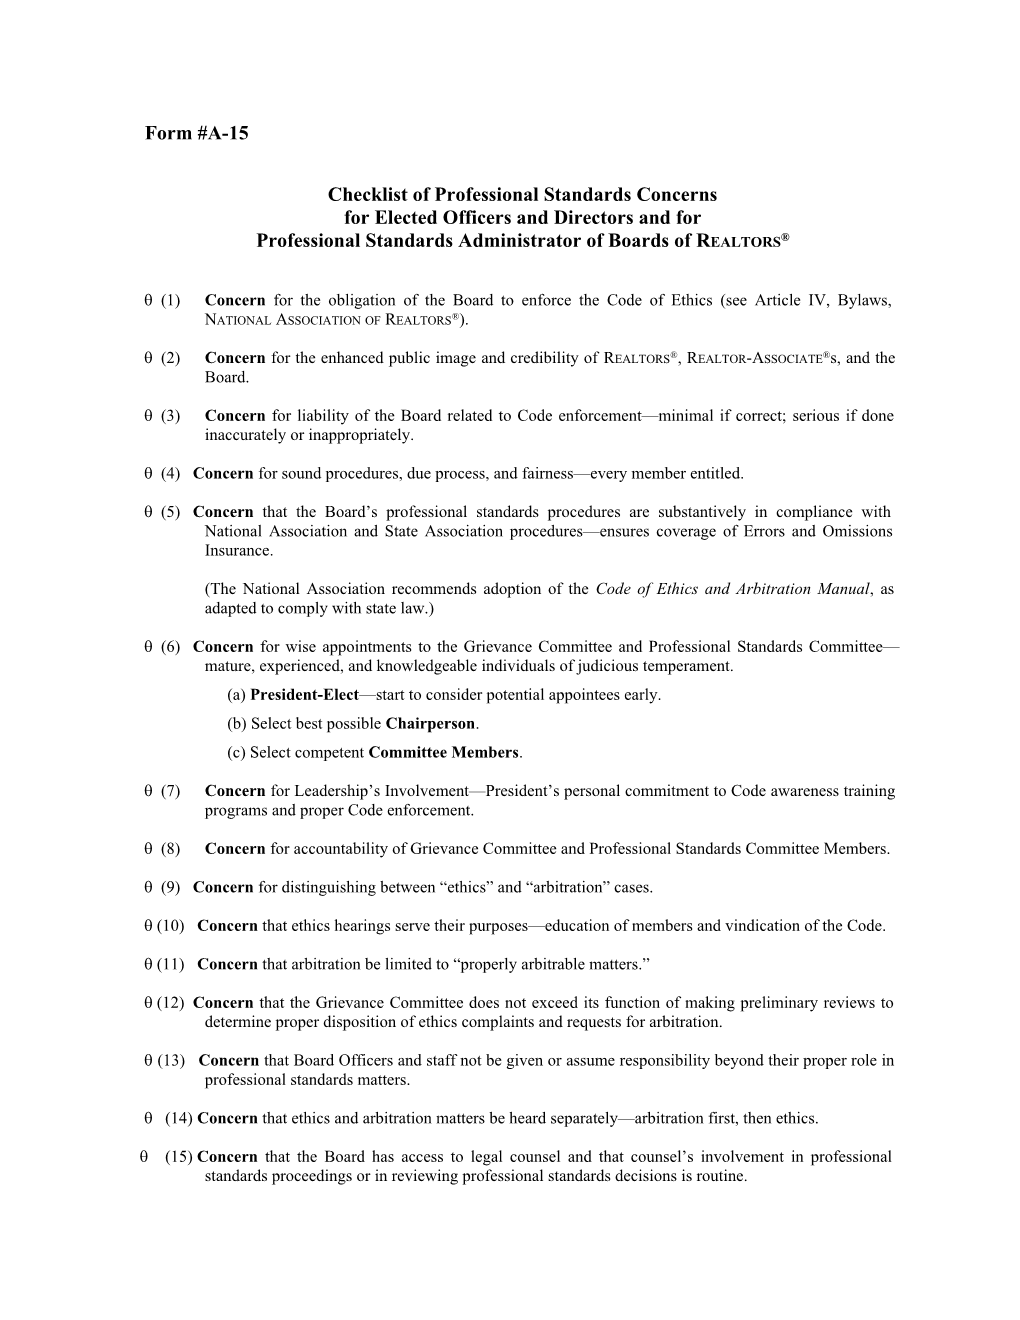 Checklist of Professional Standards Concerns